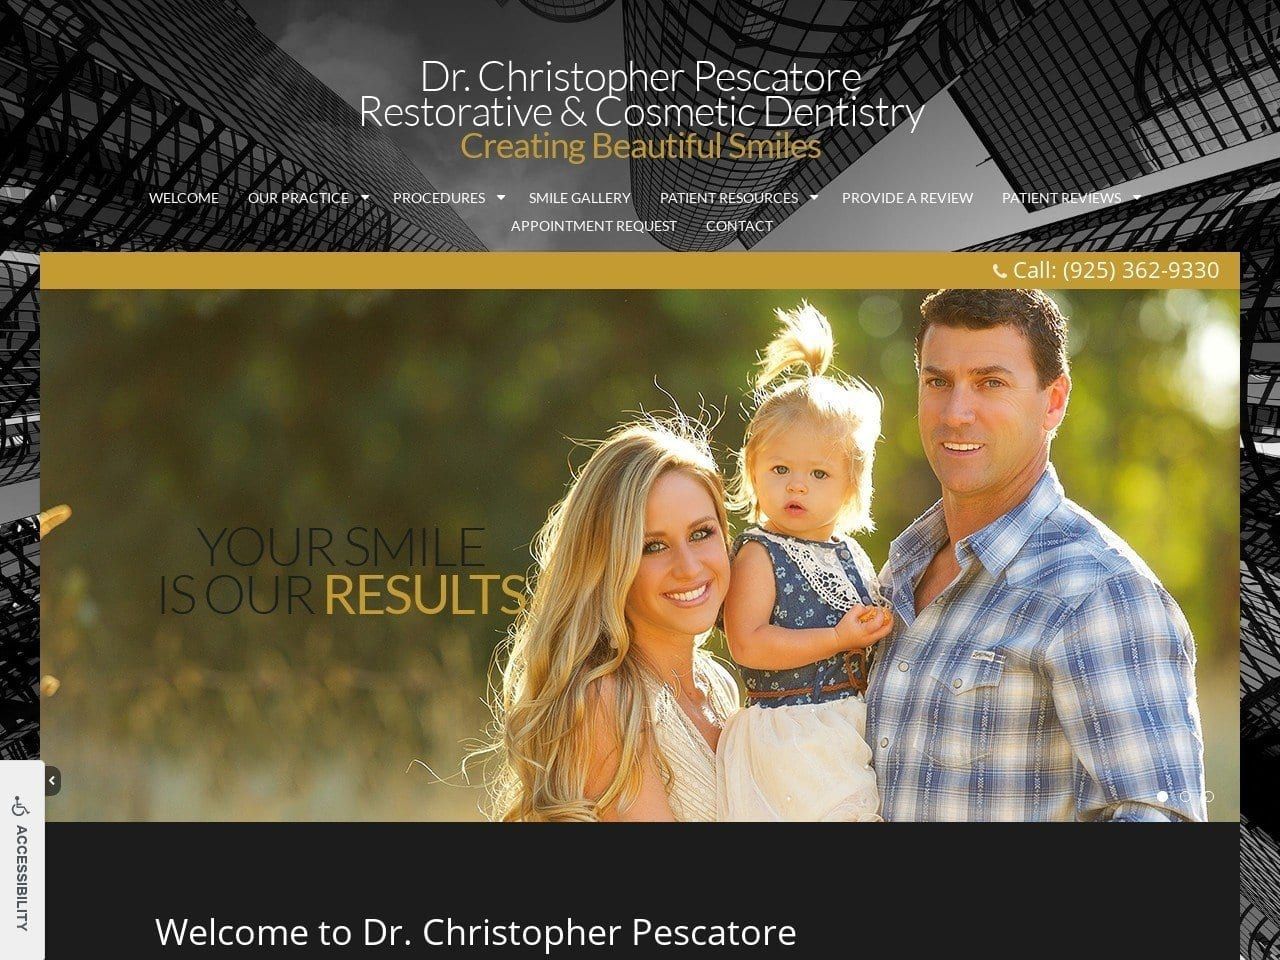 Dr. Christopher Pescatore Restorative Dentist Website Screenshot from drpescatoredmd.com